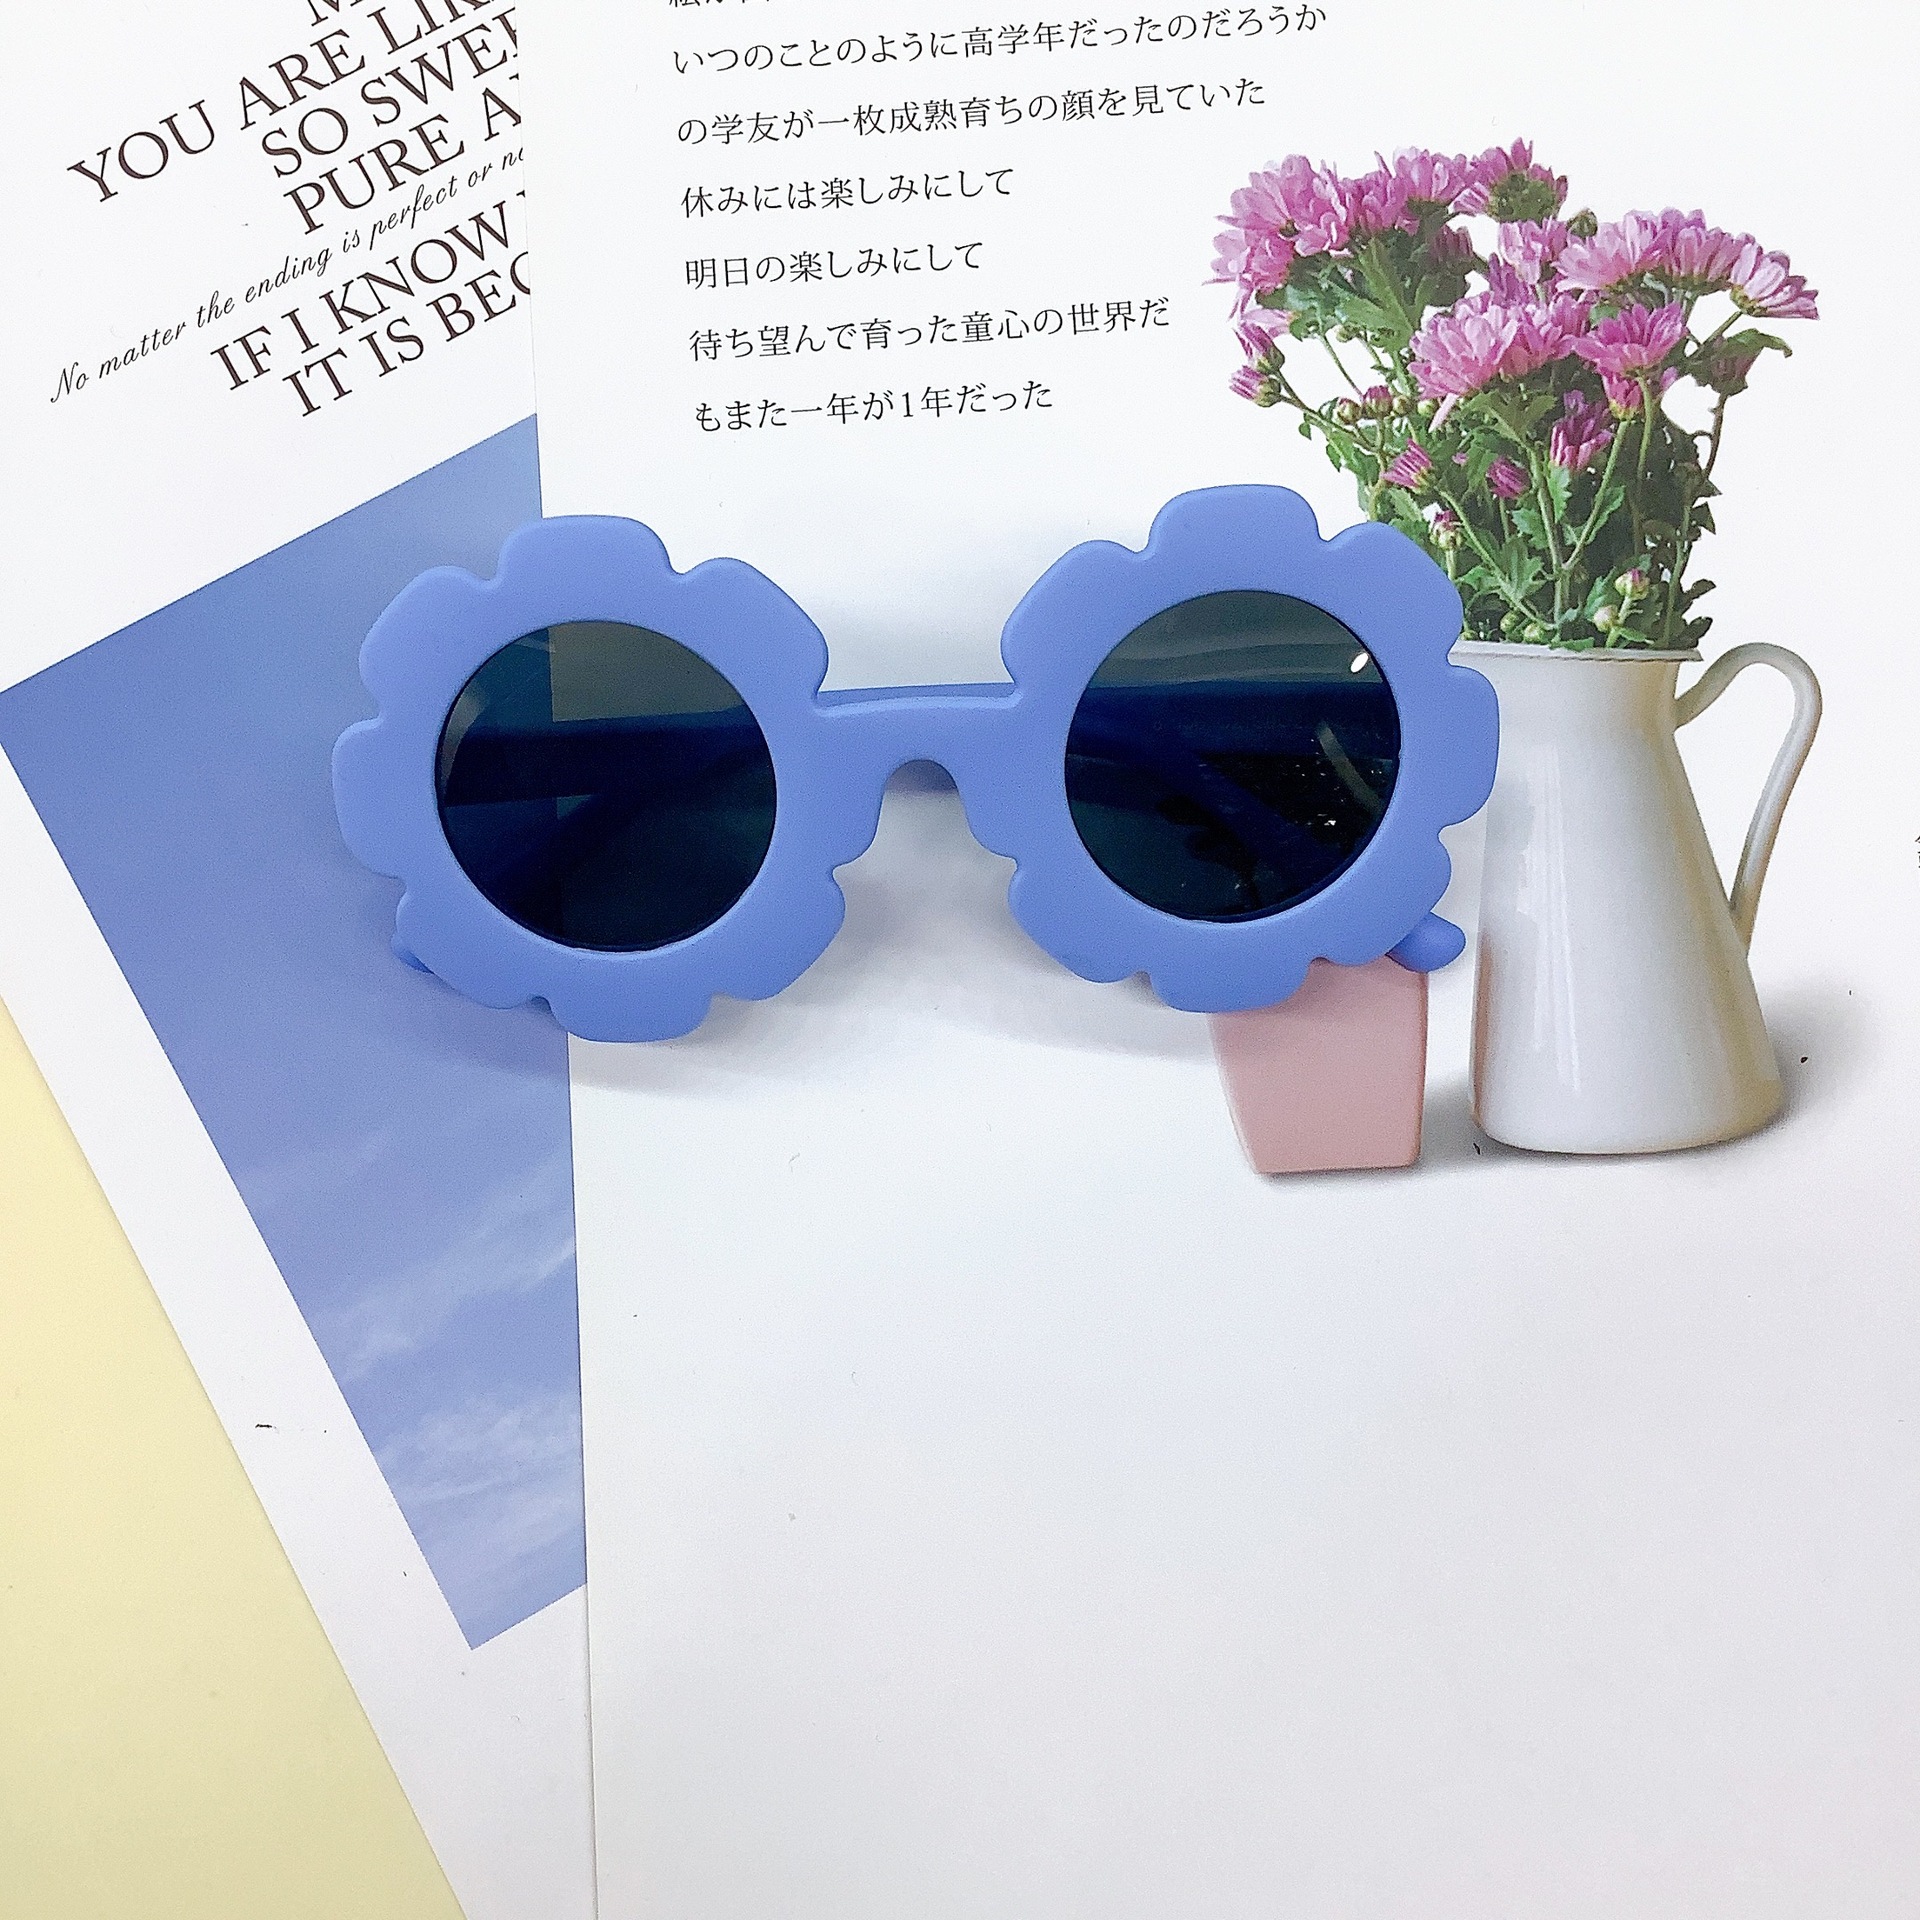 New Baby Sunglasses Fashion and Trendy Style SUNFLOWER Children's Silicone Polarized Sunglasses Travel UV-Proof Sunglasses